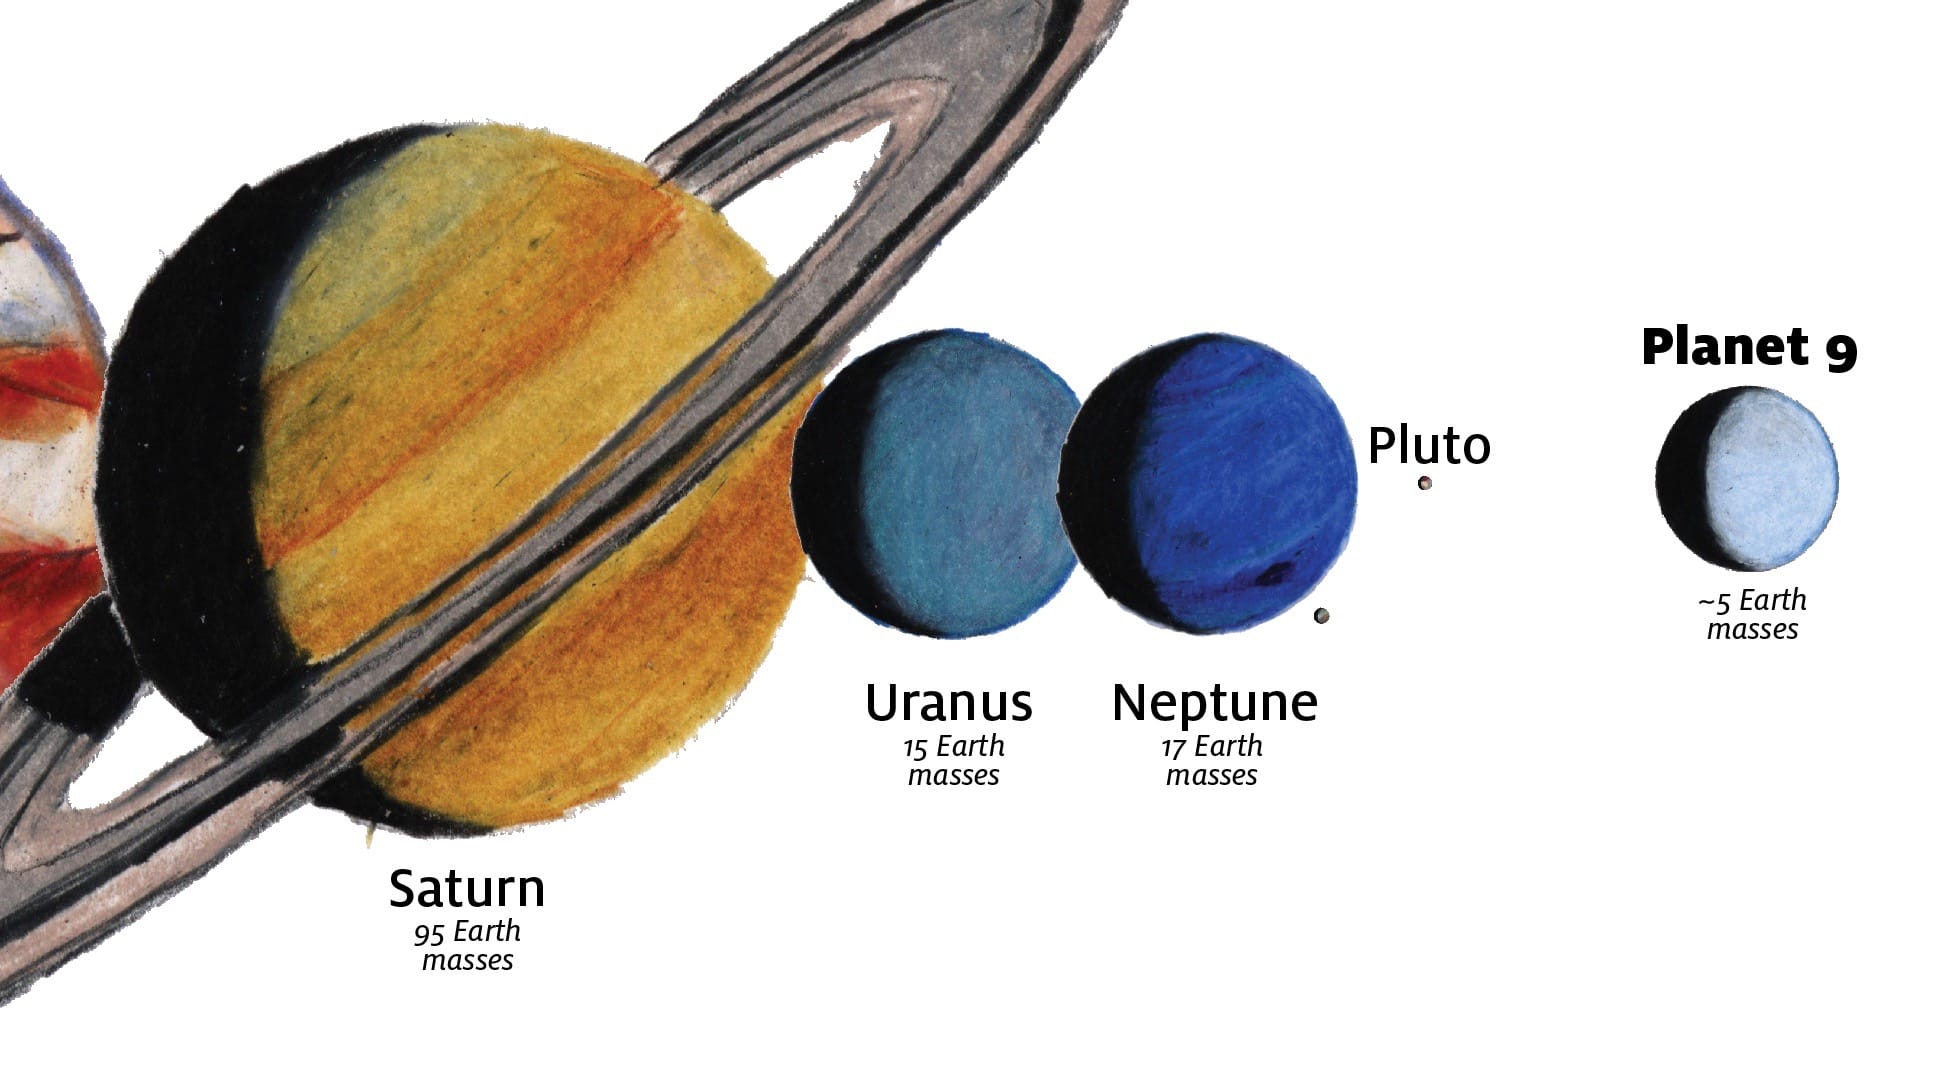 Size comparison of Planet 9. Shows Saturn, Uranus, Neptune, Pluto, and Planet 9.